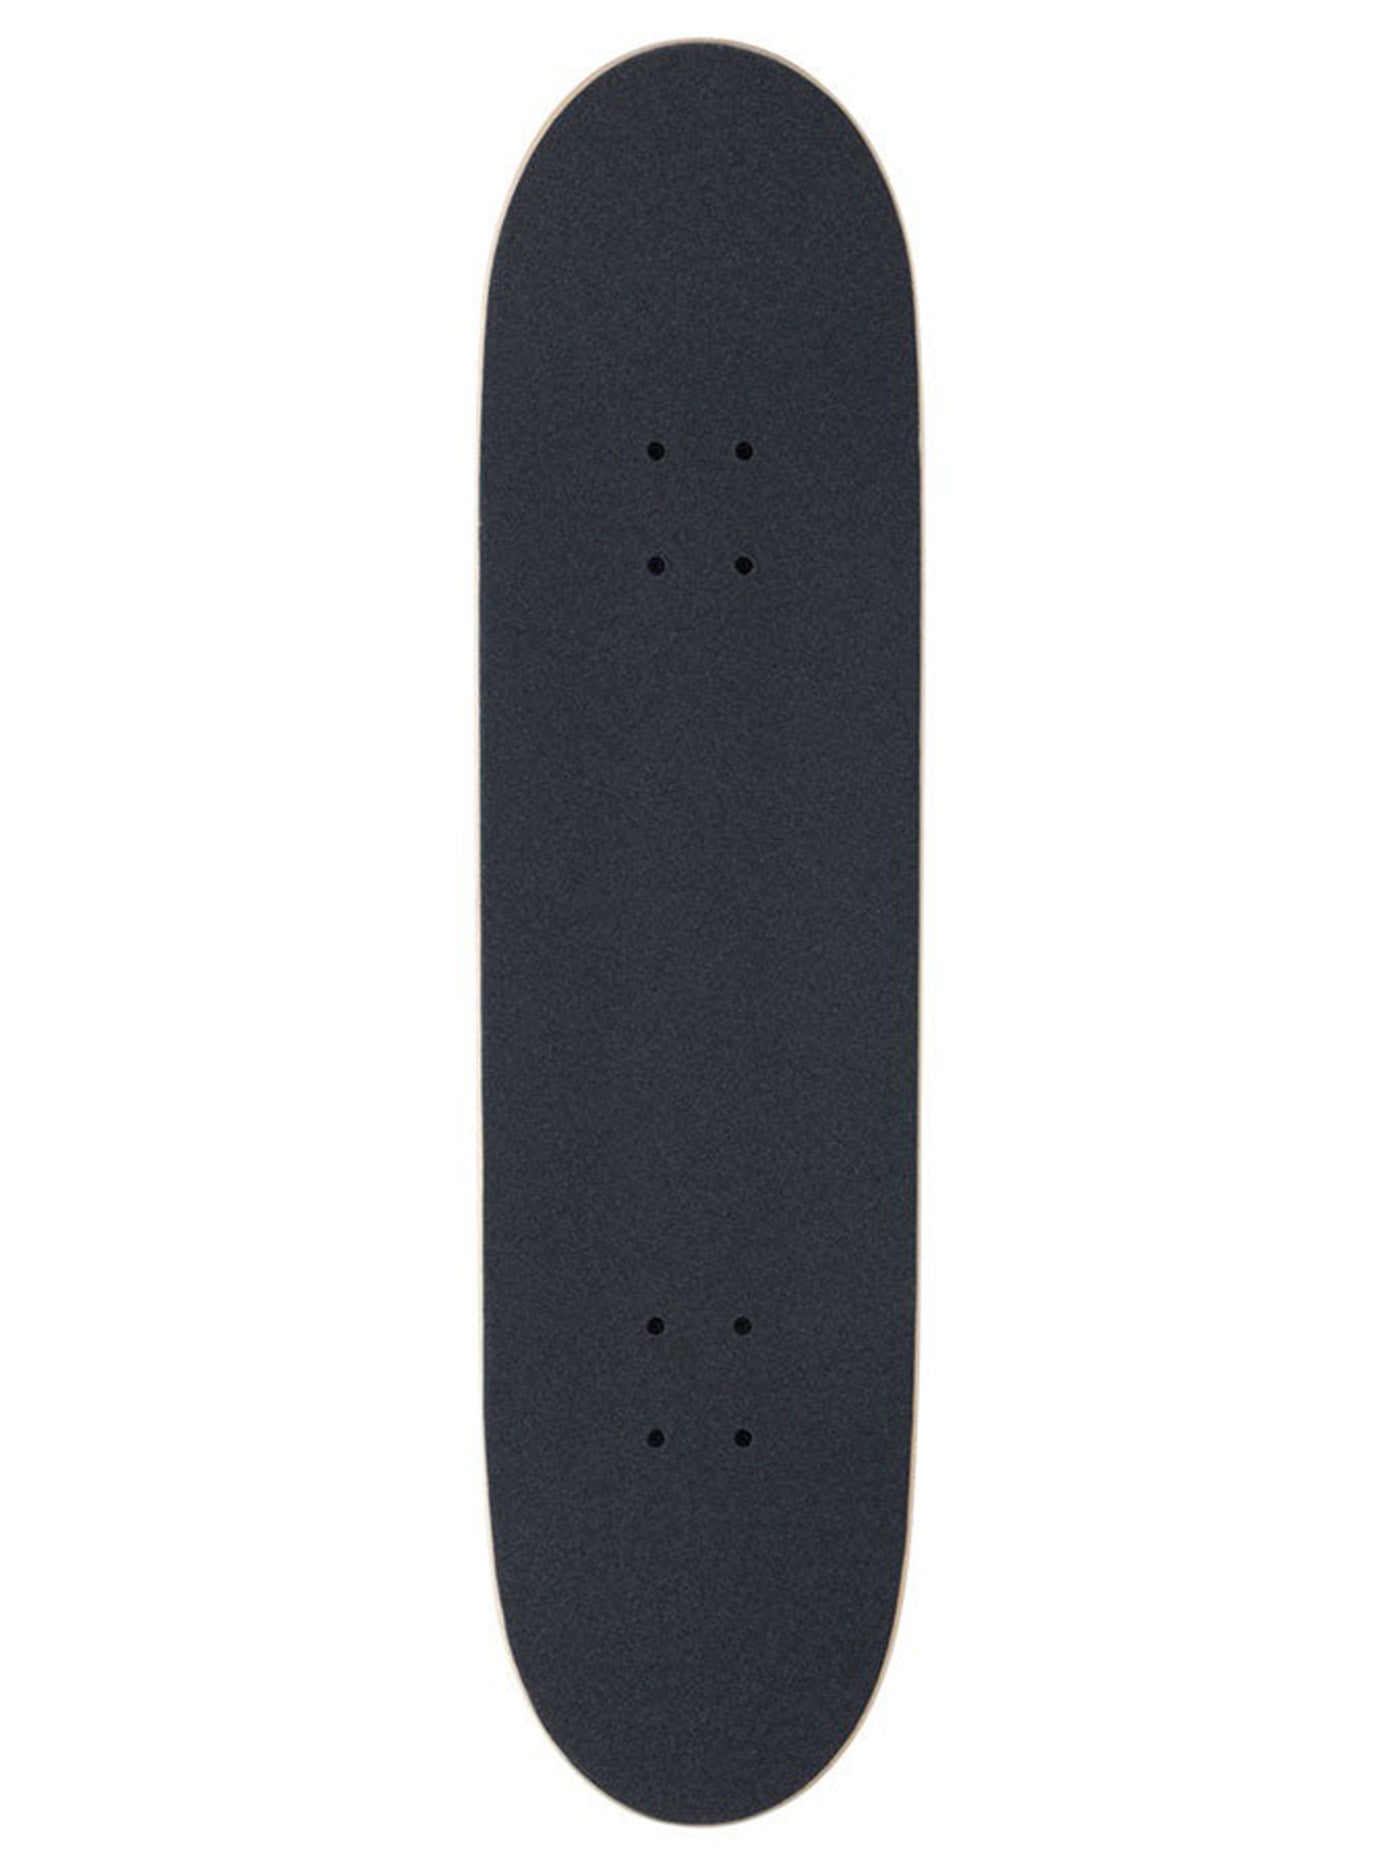 Santa Cruz Screaming Hand Large 8.25'' Complete Skateboard